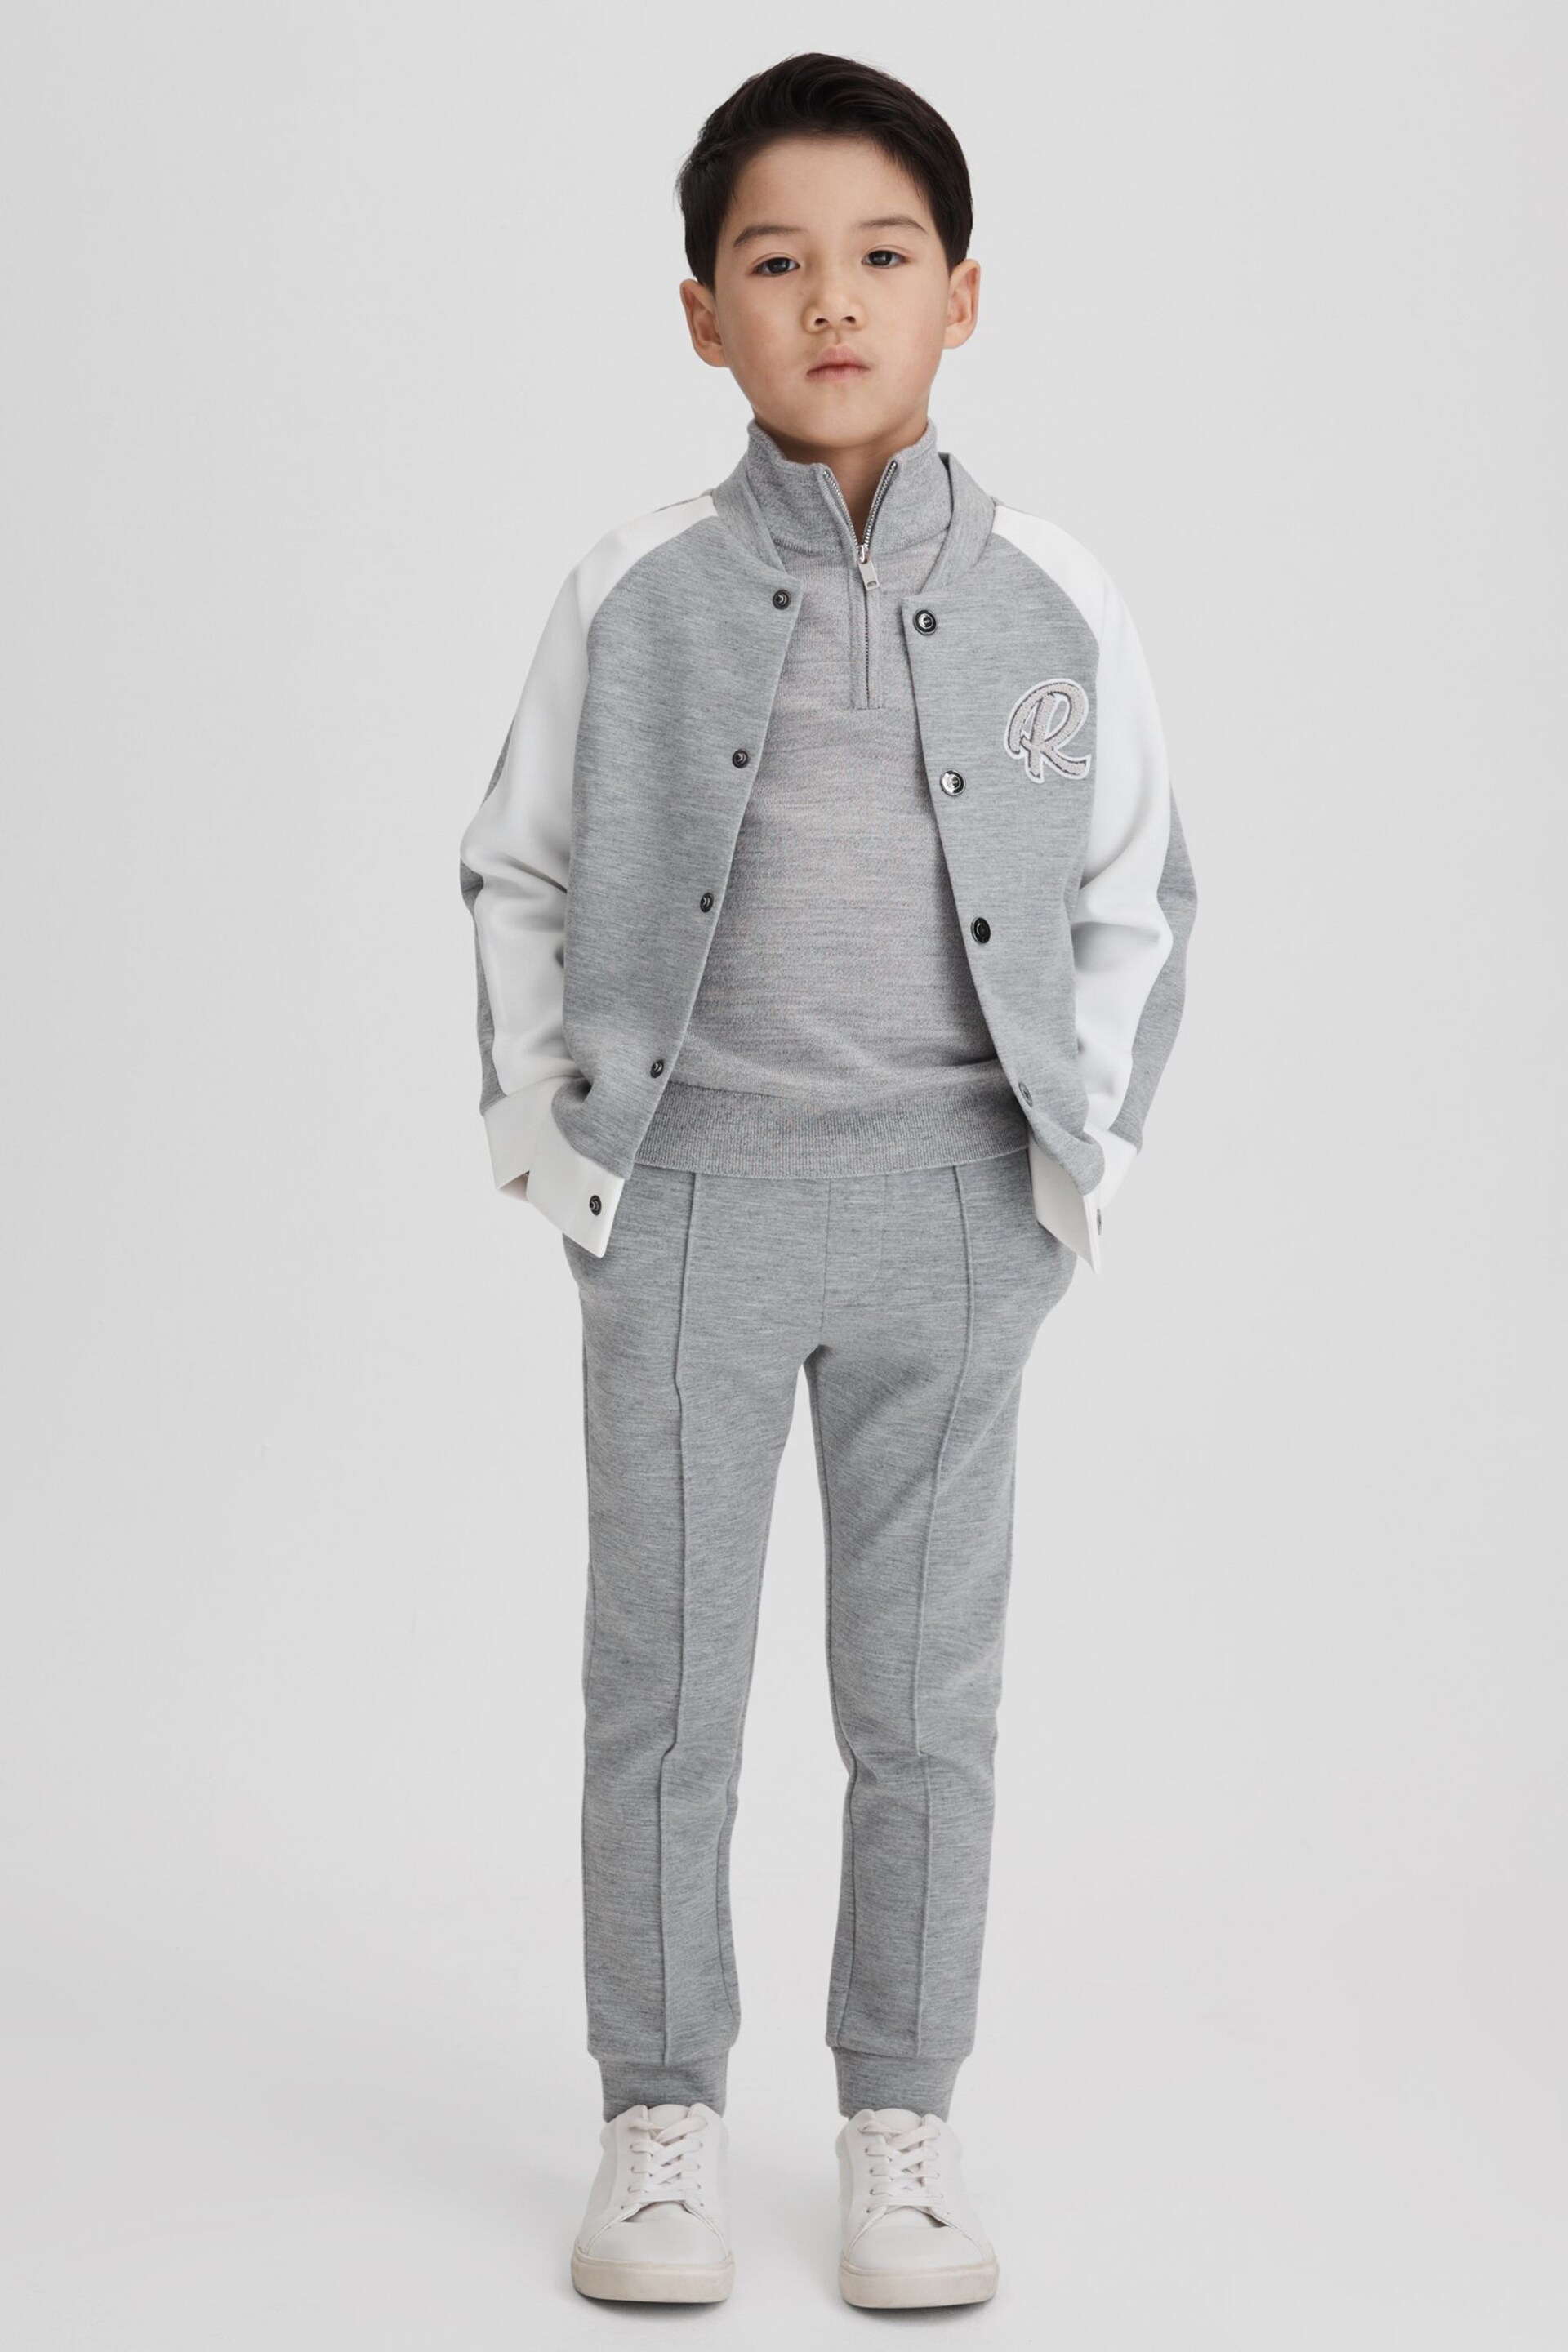 Reiss Soft Grey/White Pelham Senior Jersey Varsity Jacket - Image 3 of 6